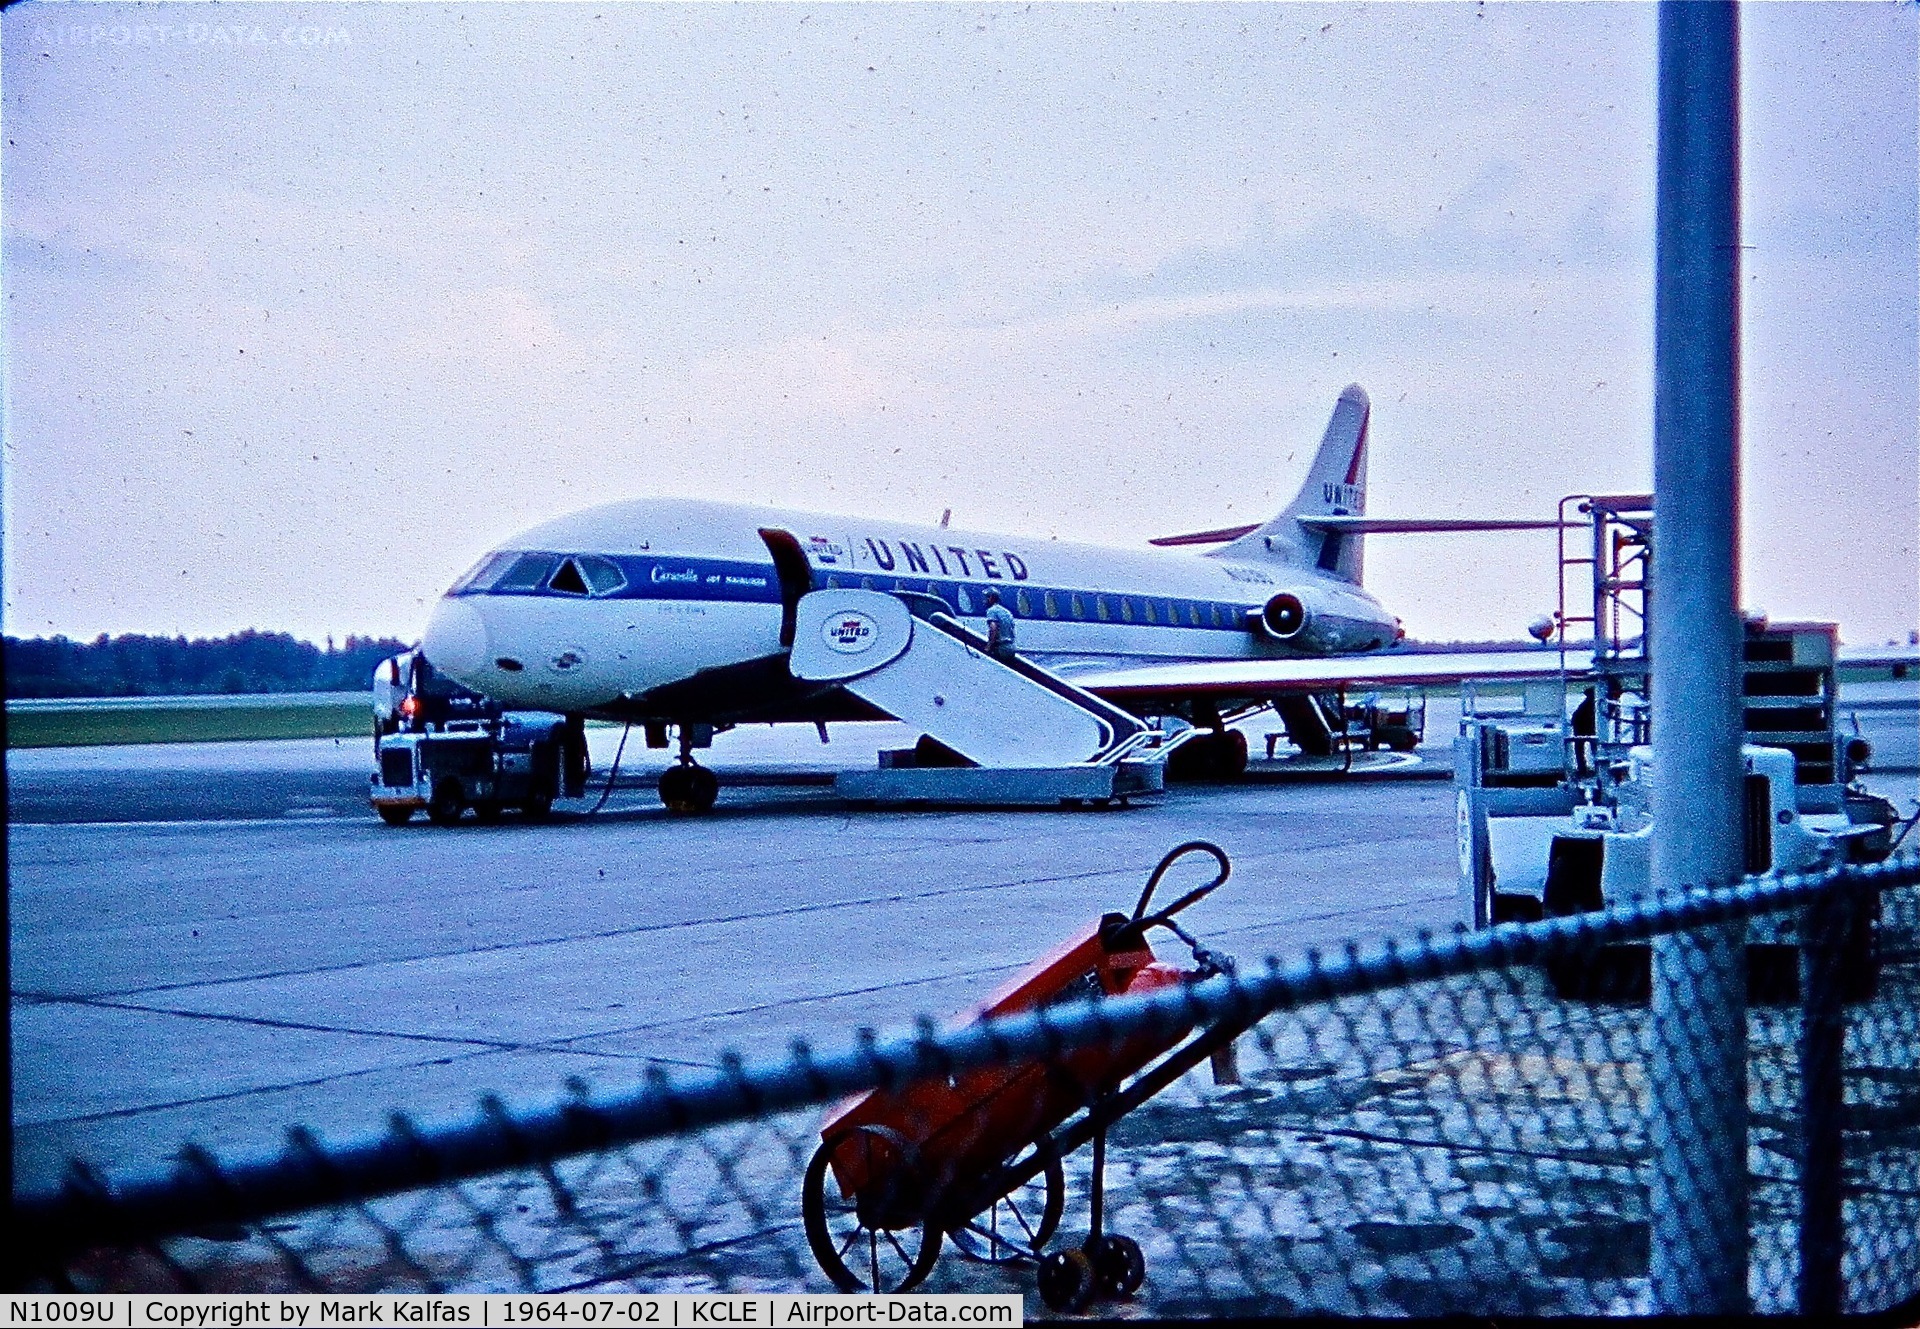 N1009U, 1961 Sud Aviation SE-210 Caravelle VI-R C/N 94, United Airlines SE-210 Caravelle VI-R, N1009U on the ramp at CLE